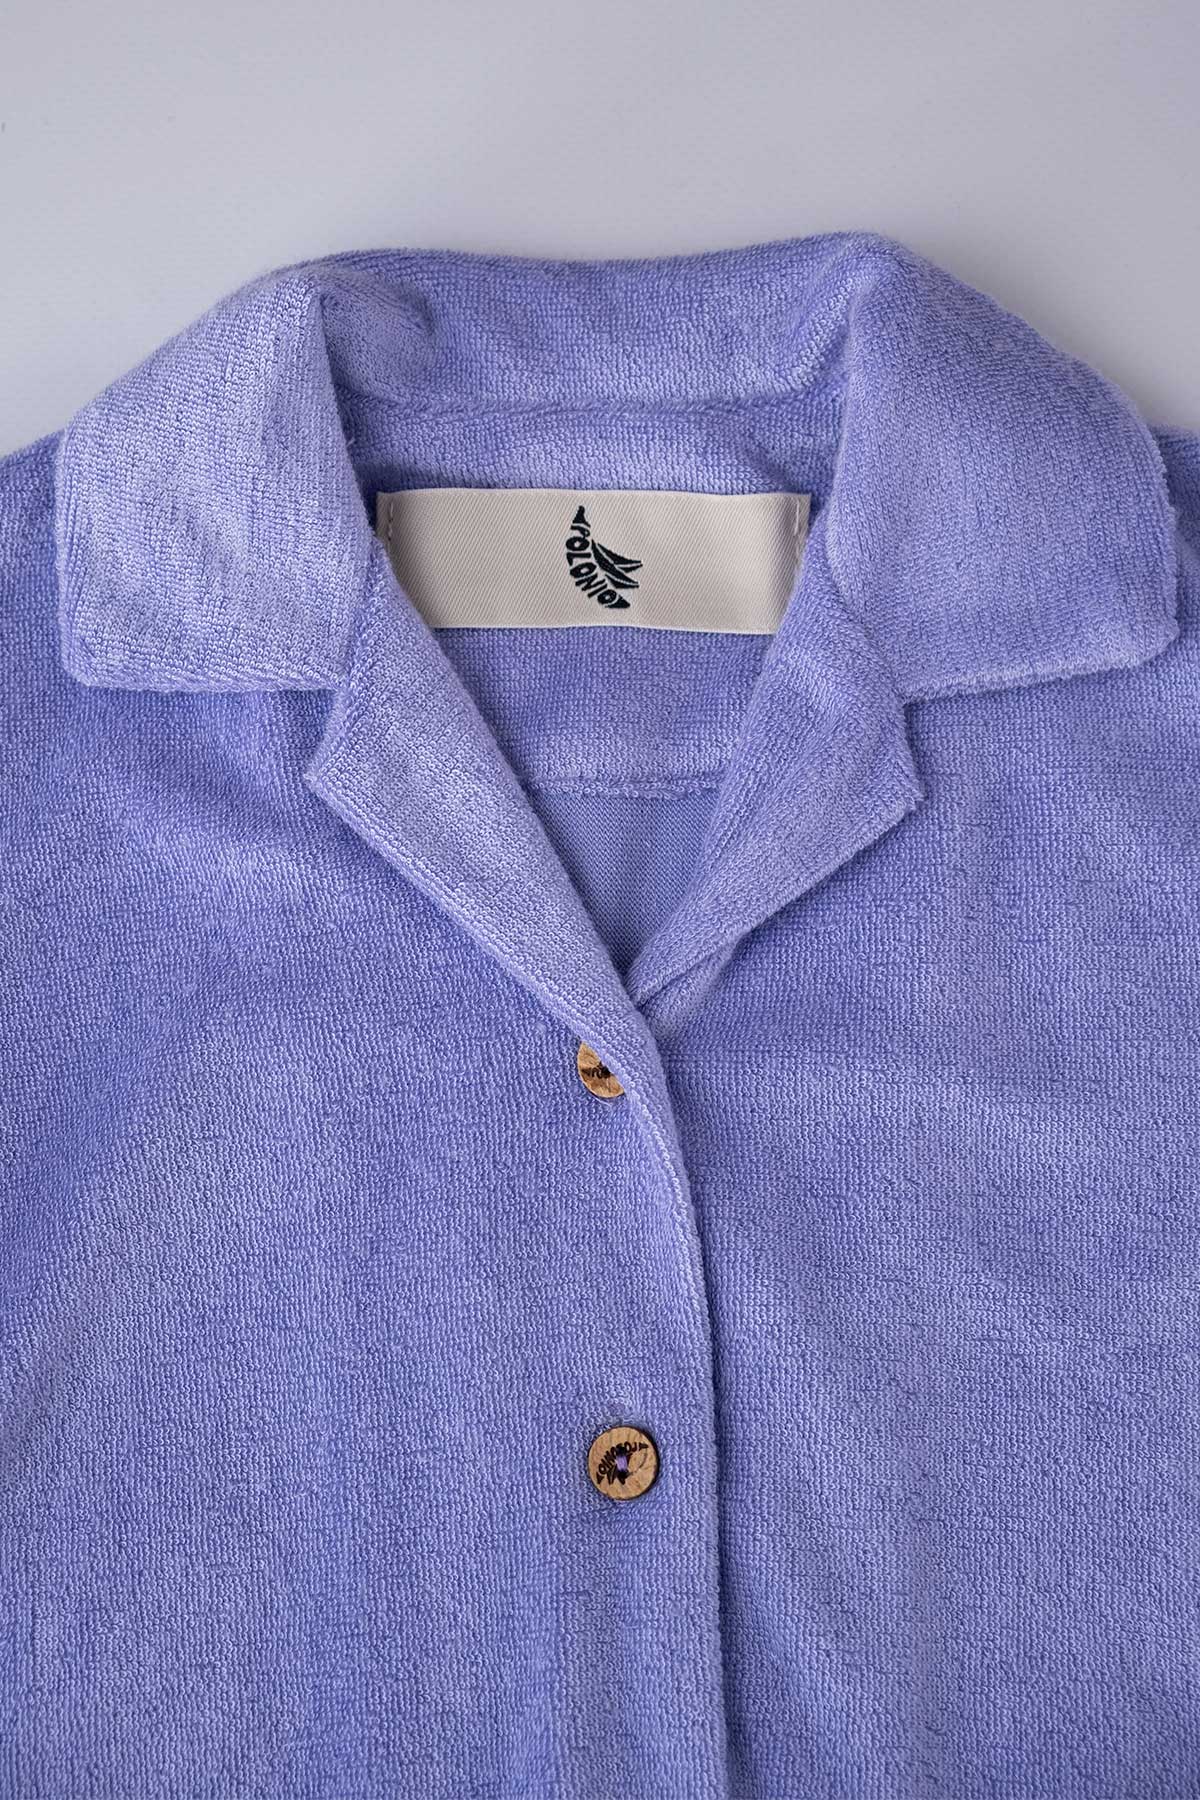 Lavender Terry Kids Shirt - Polonio